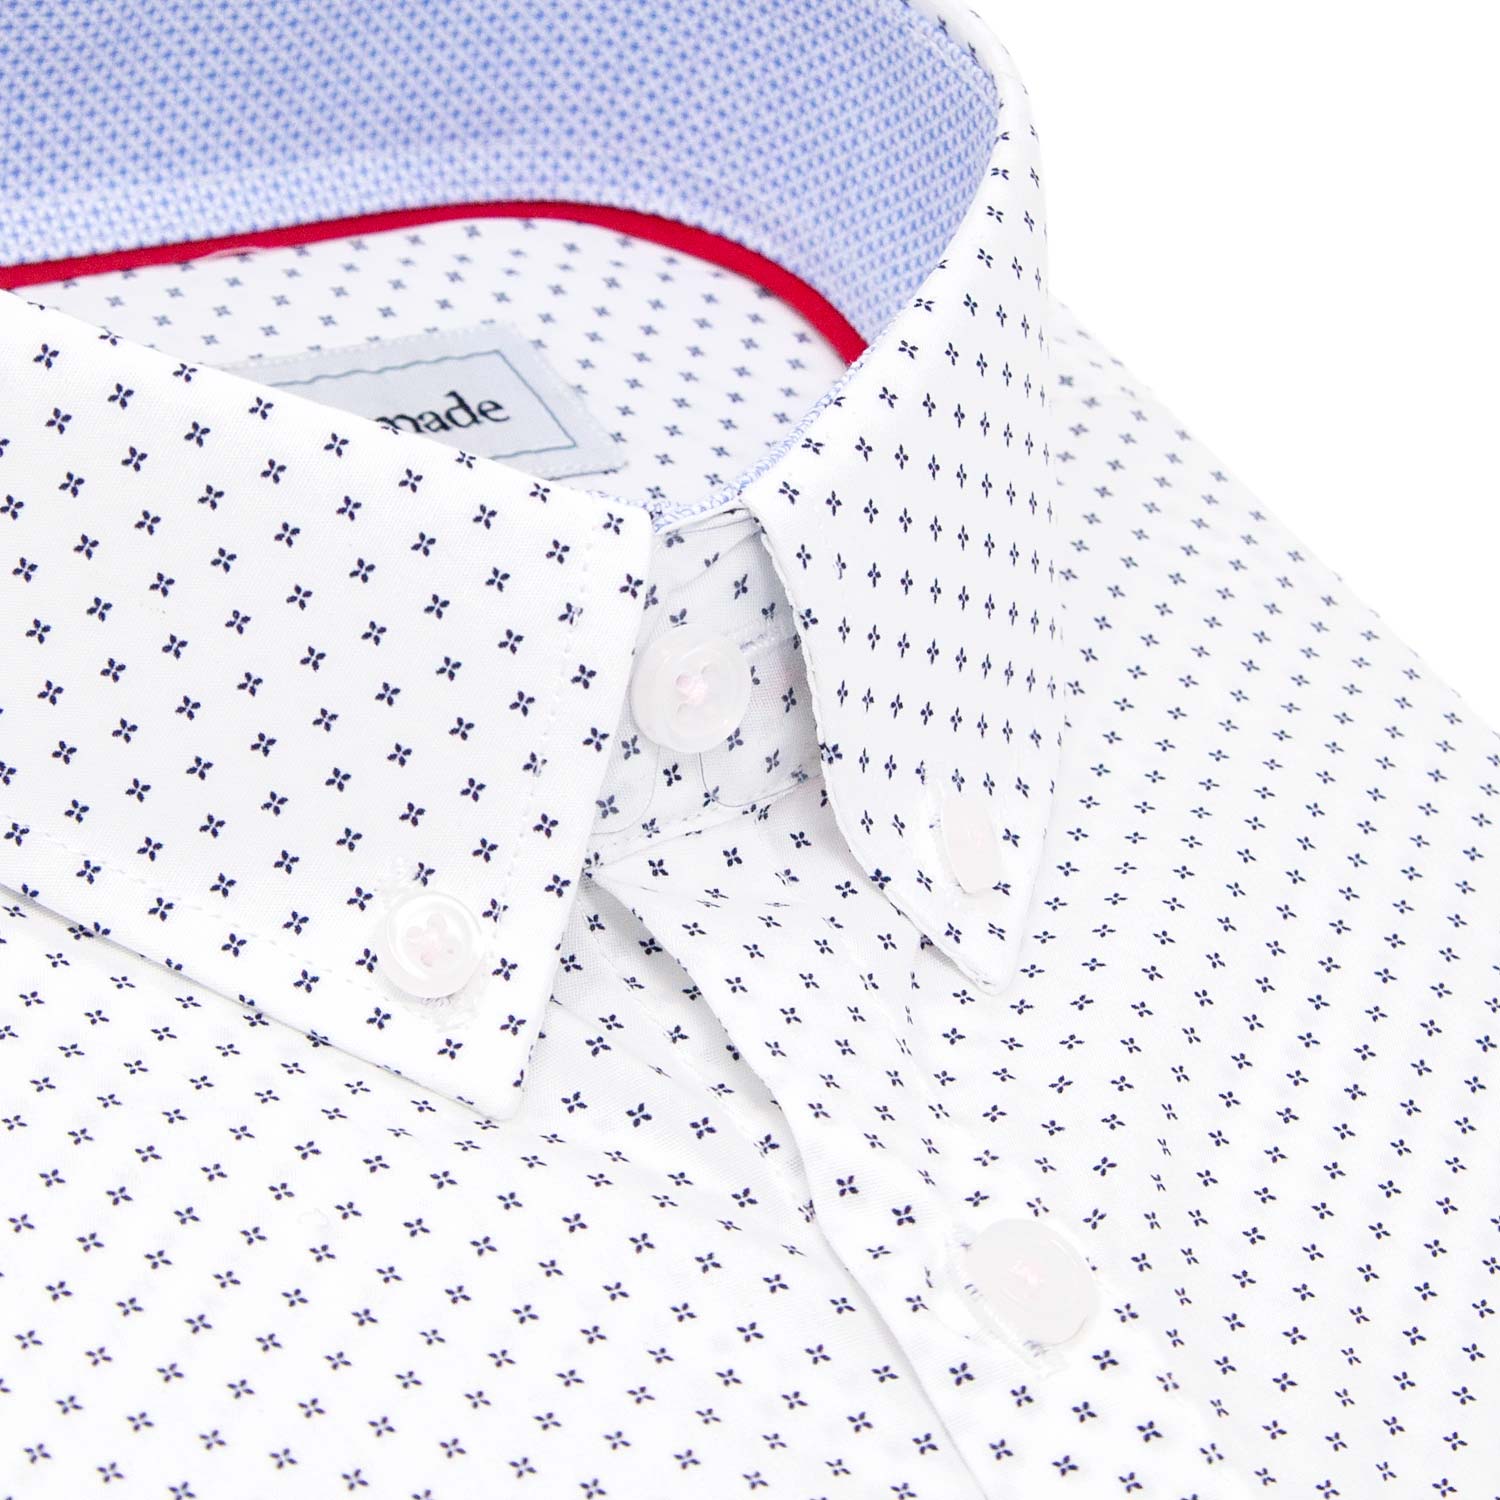 mens white dress shirts button down collar close up